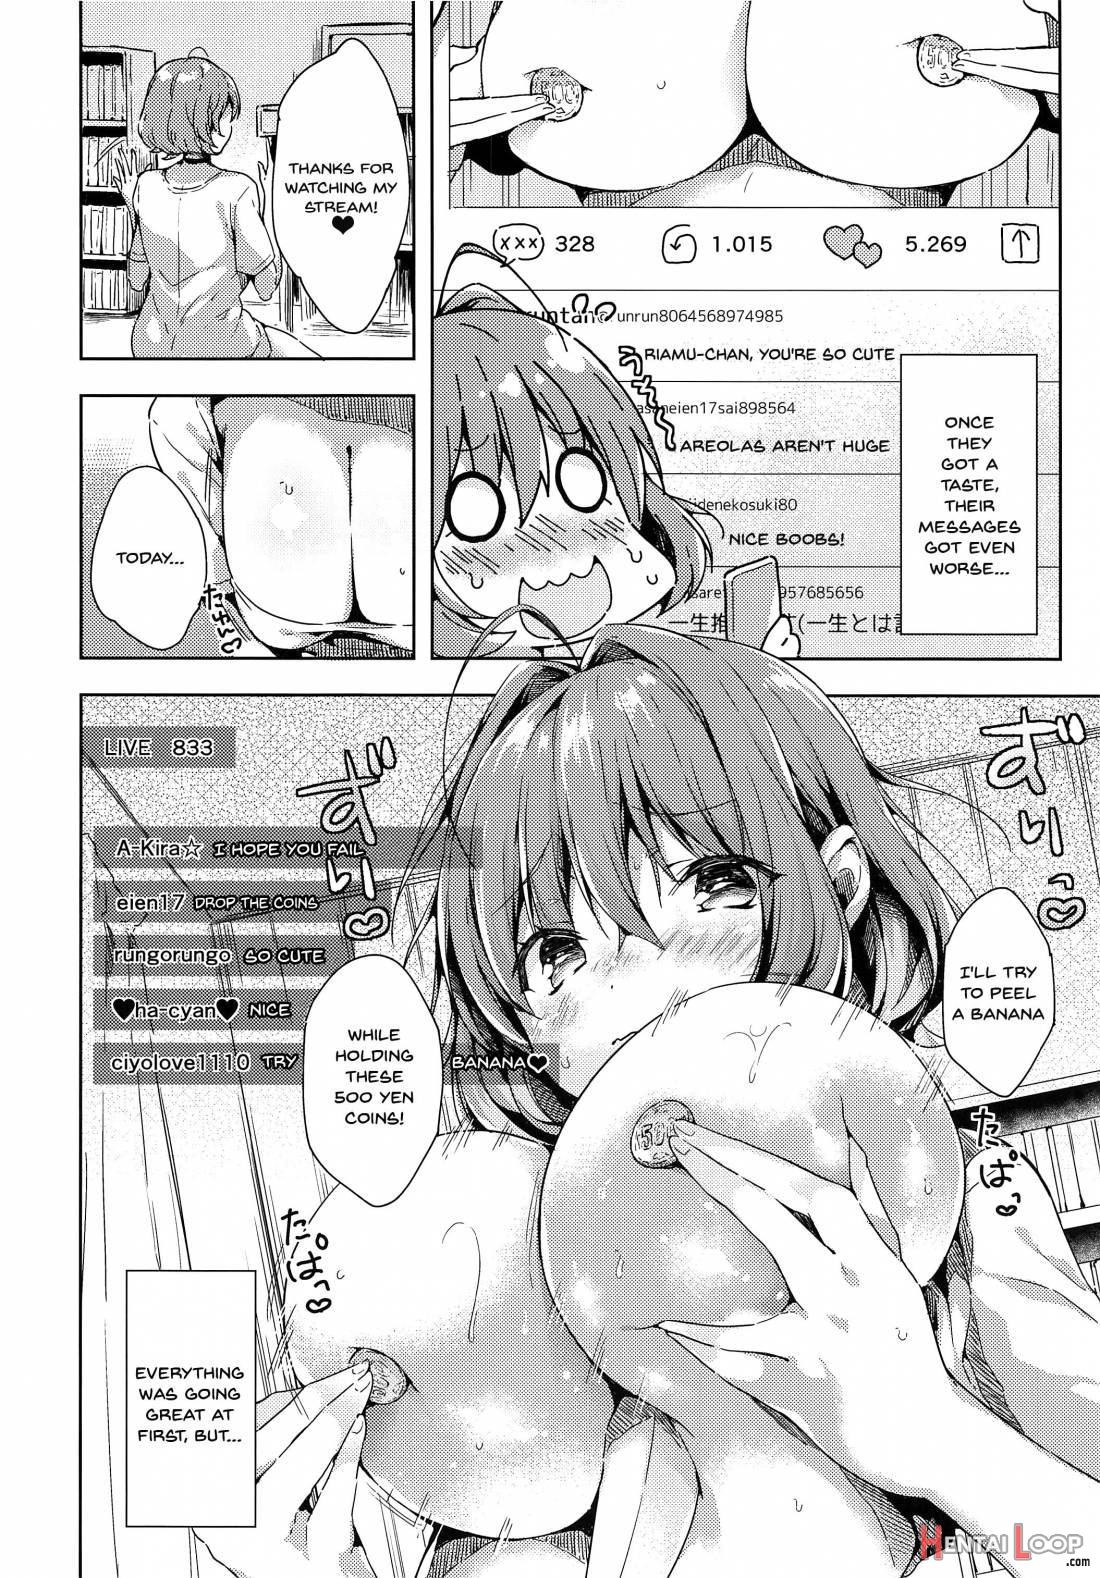 Riamu-chan Shoumei Sex page 7